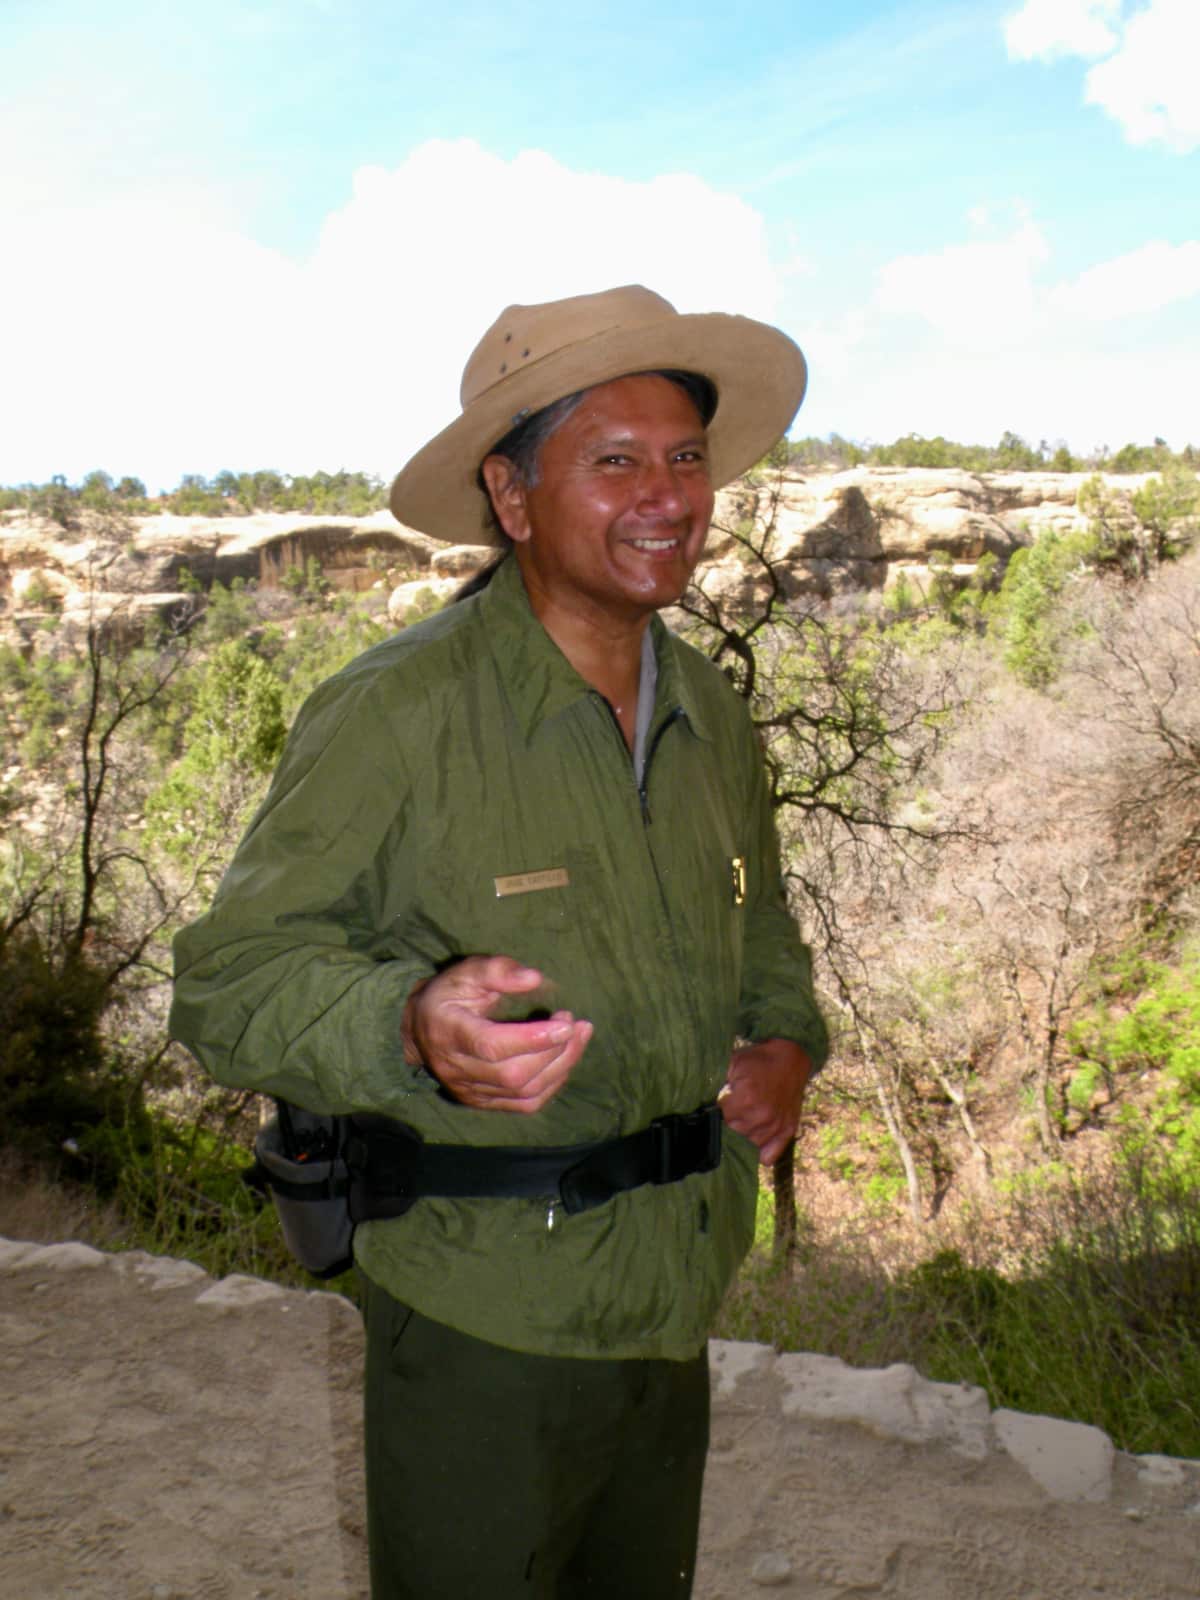 Male ranger in green jacket smiling